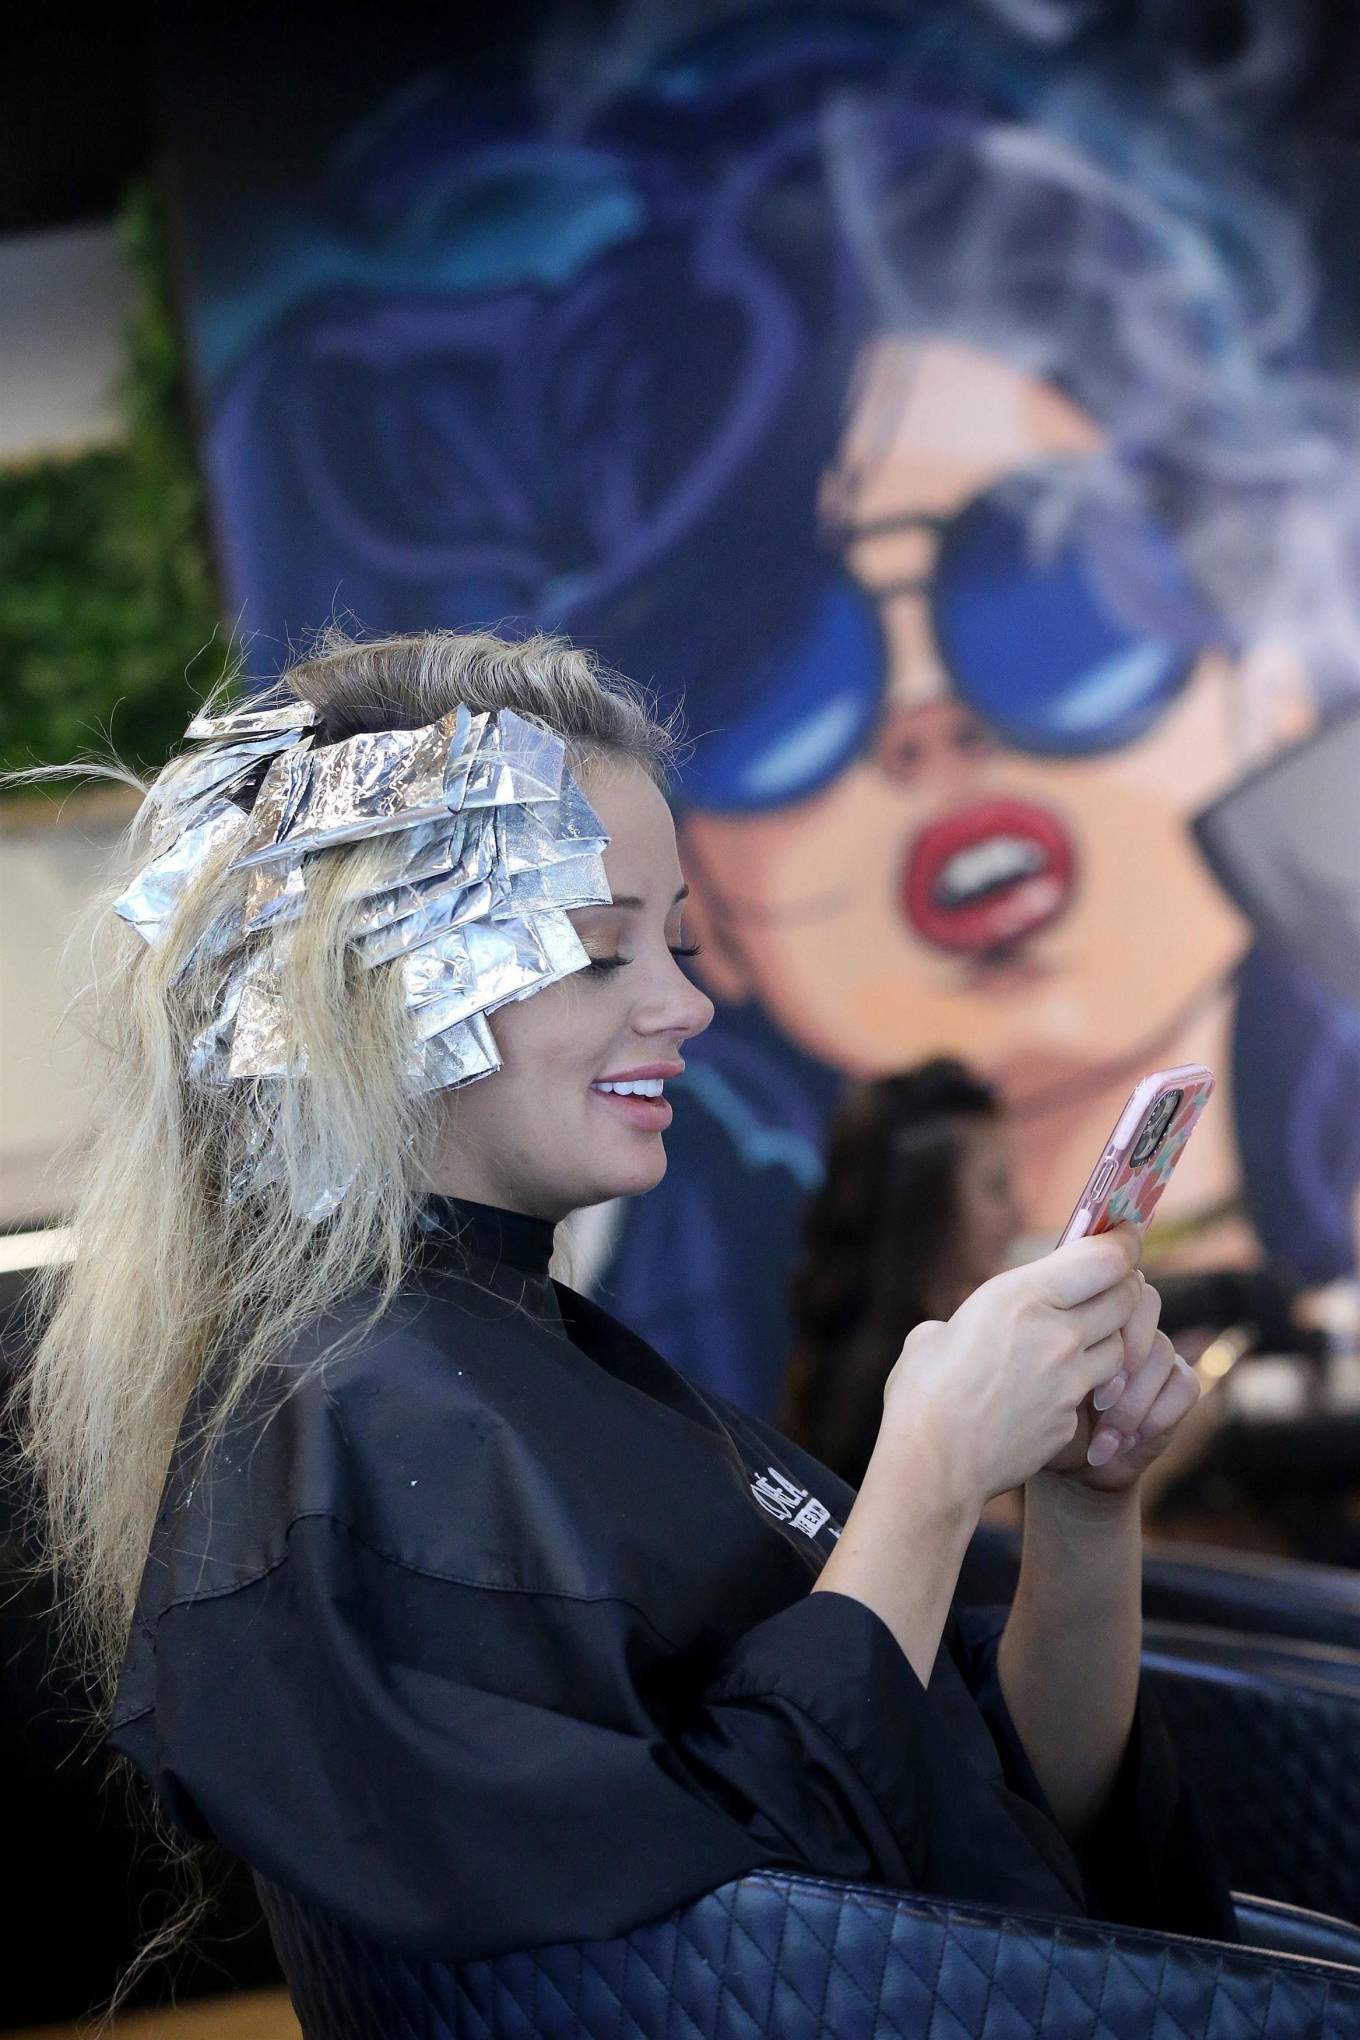 Jessika Power â€“ Seen at a hair salon on the Gold Coast